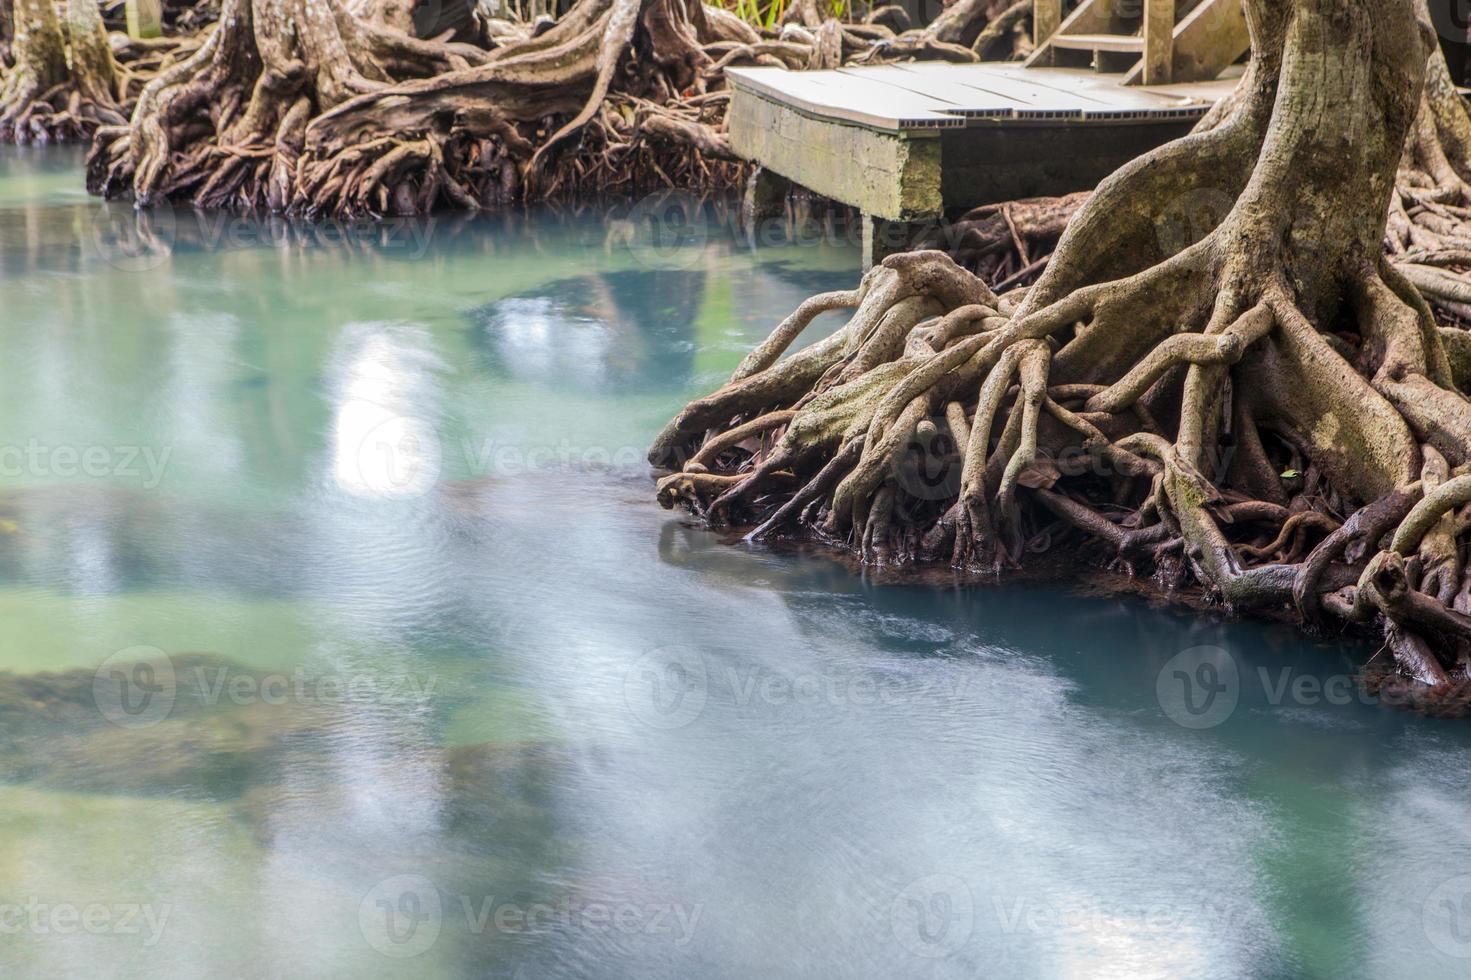 canal esmeralda cristalino incrível com floresta de mangue foto